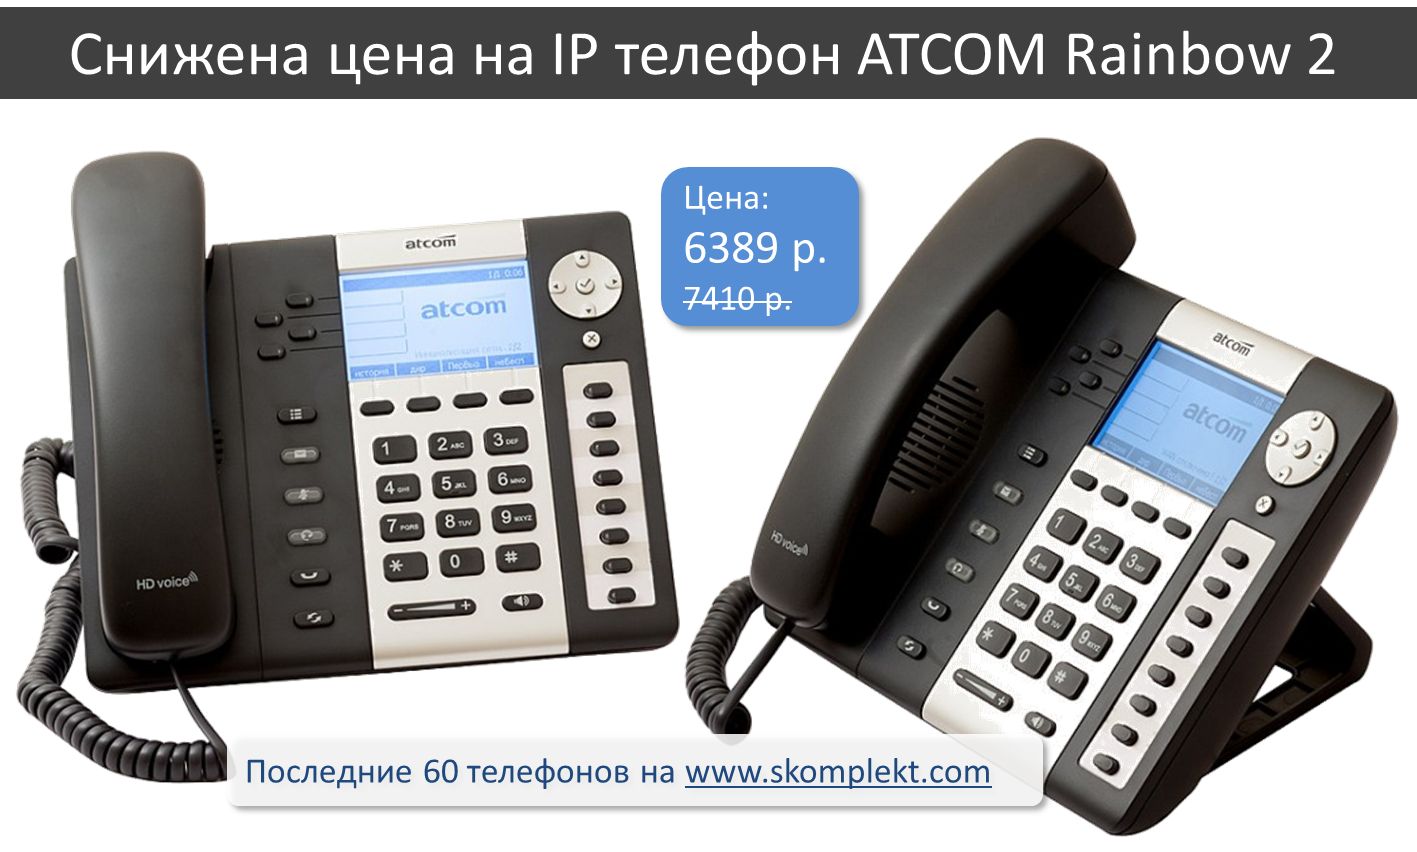 Снижена цена на IP телефон ATCOM Rainbow 2 (скидки)